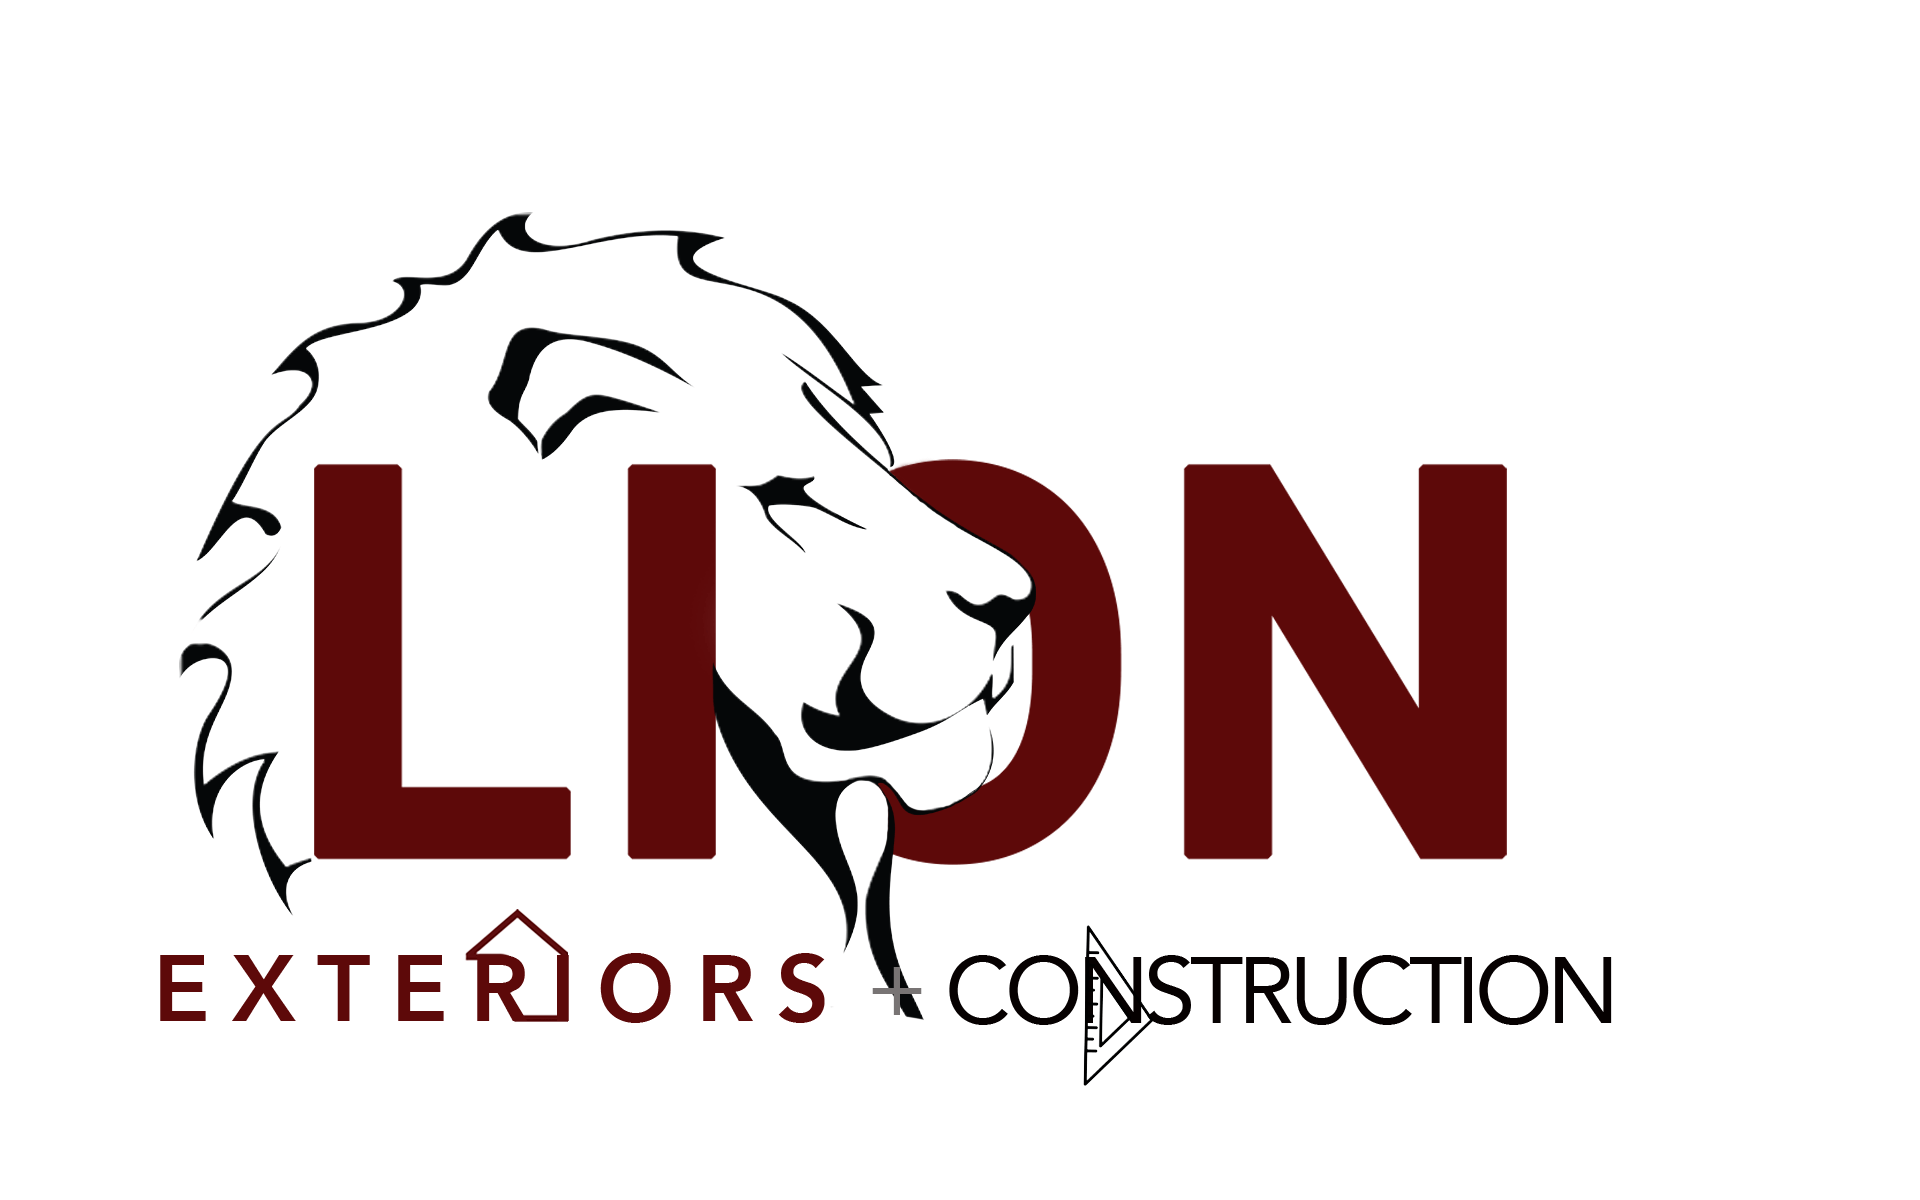 Lion Exteriors and Construction logo